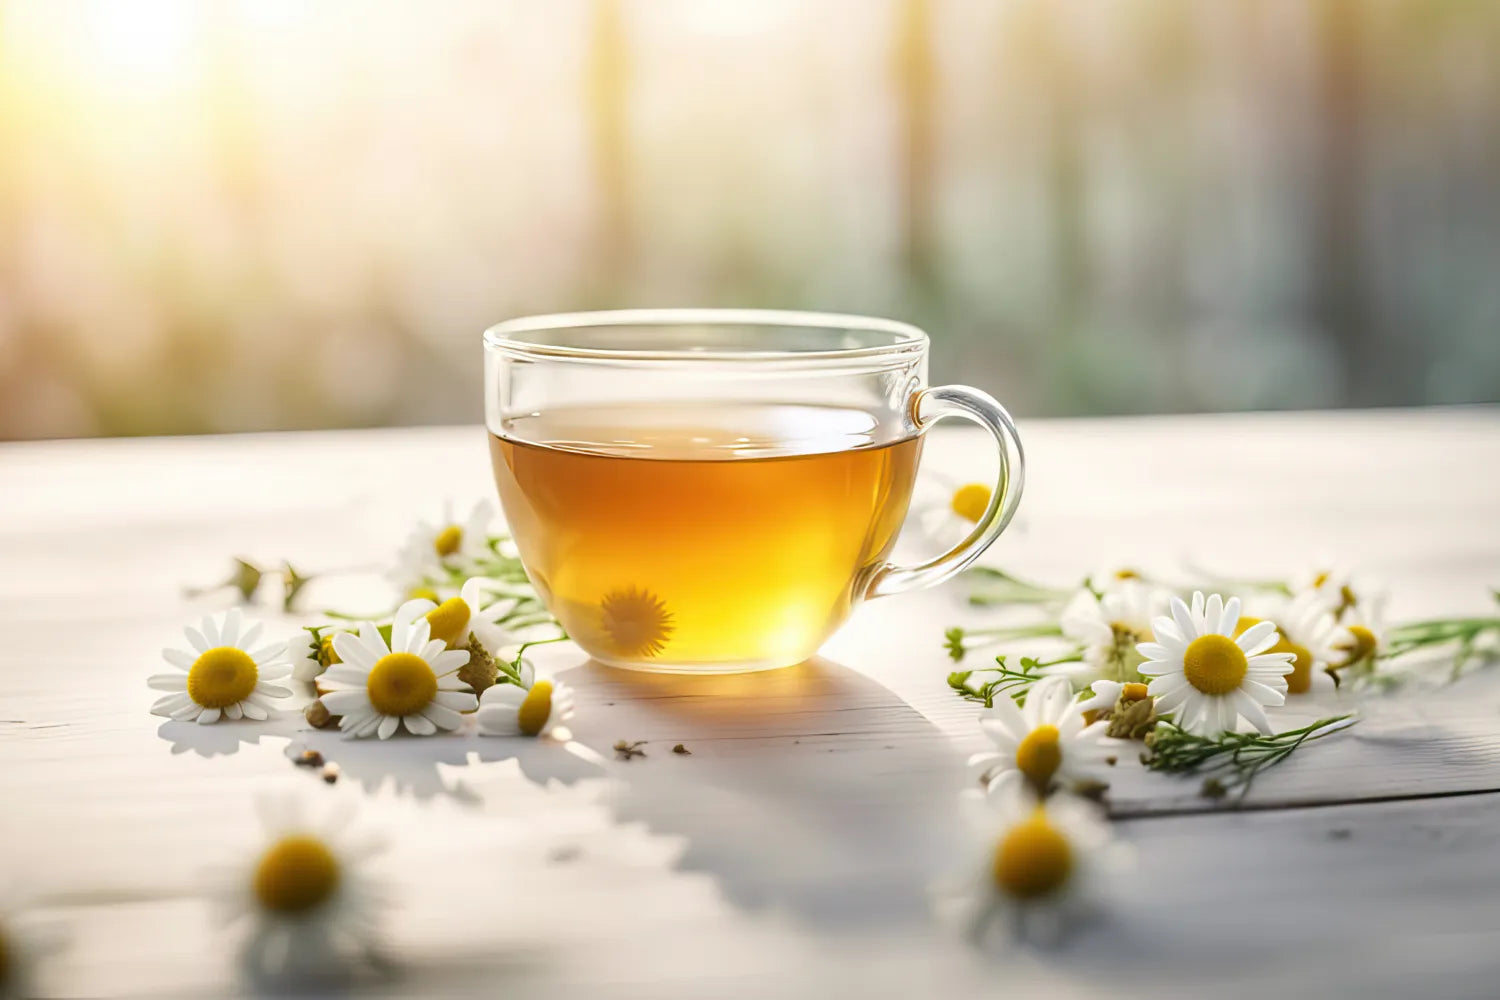 Does Chamomile Tea Help Make You Feel Sleepy?